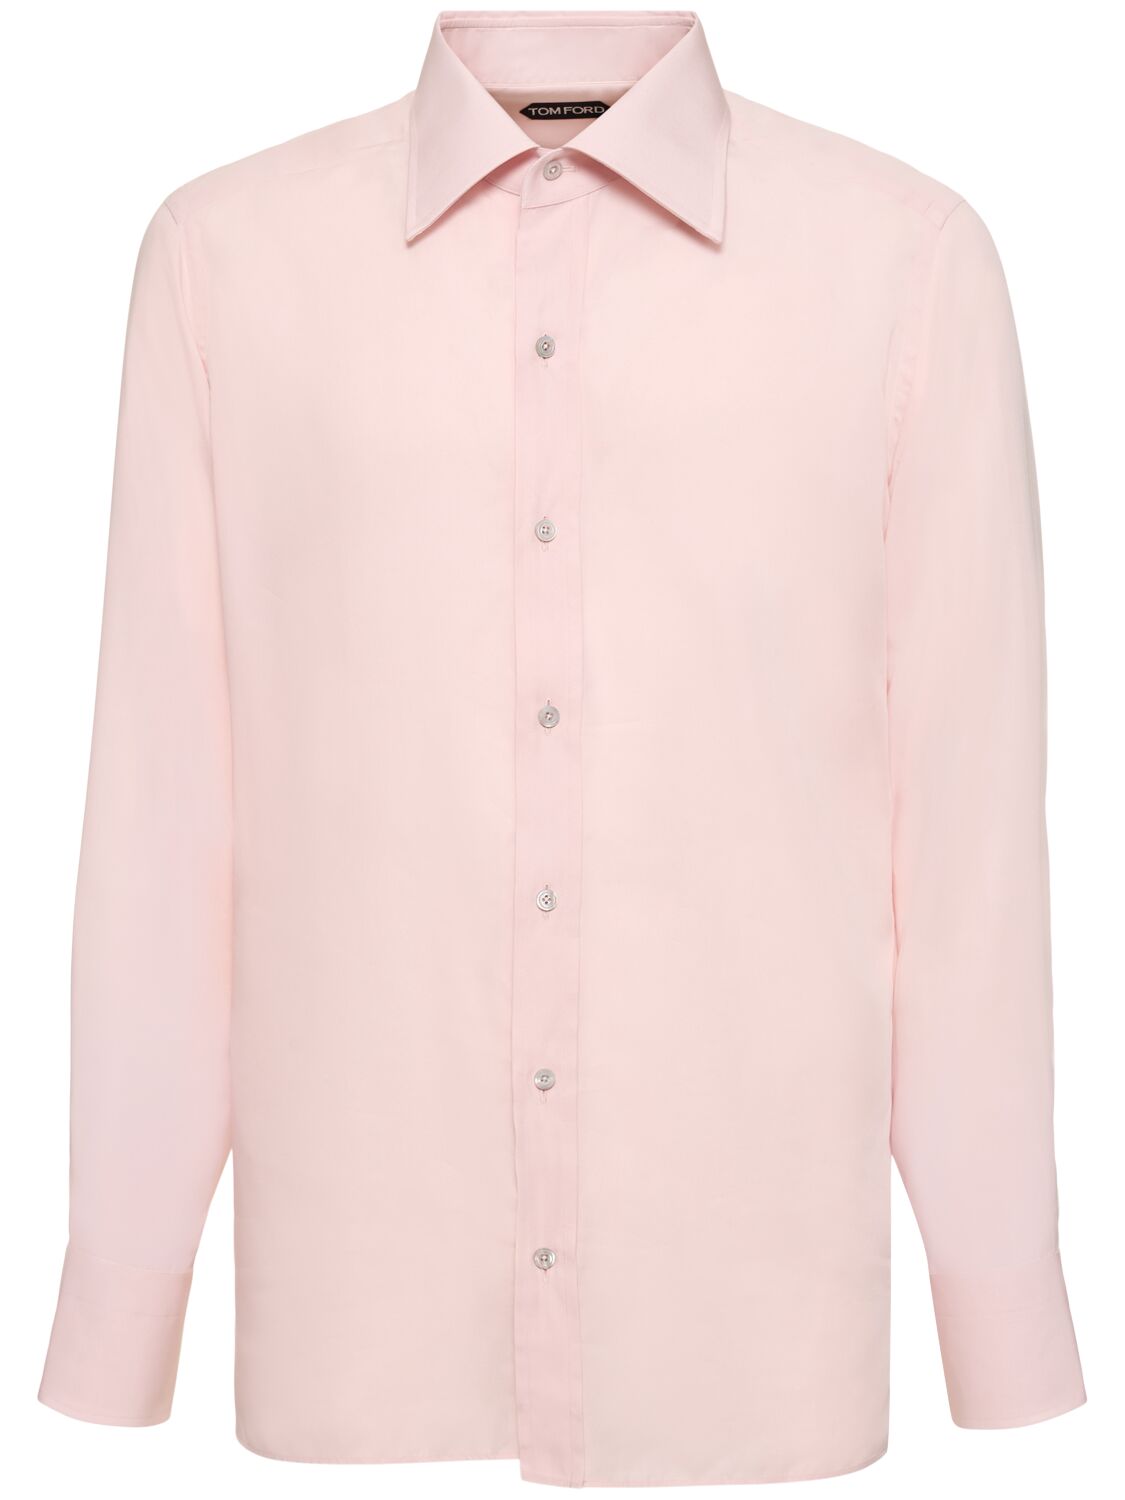 Tom Ford Slim Barrel Cuff Fluid Poplin Shirt In Light Pink